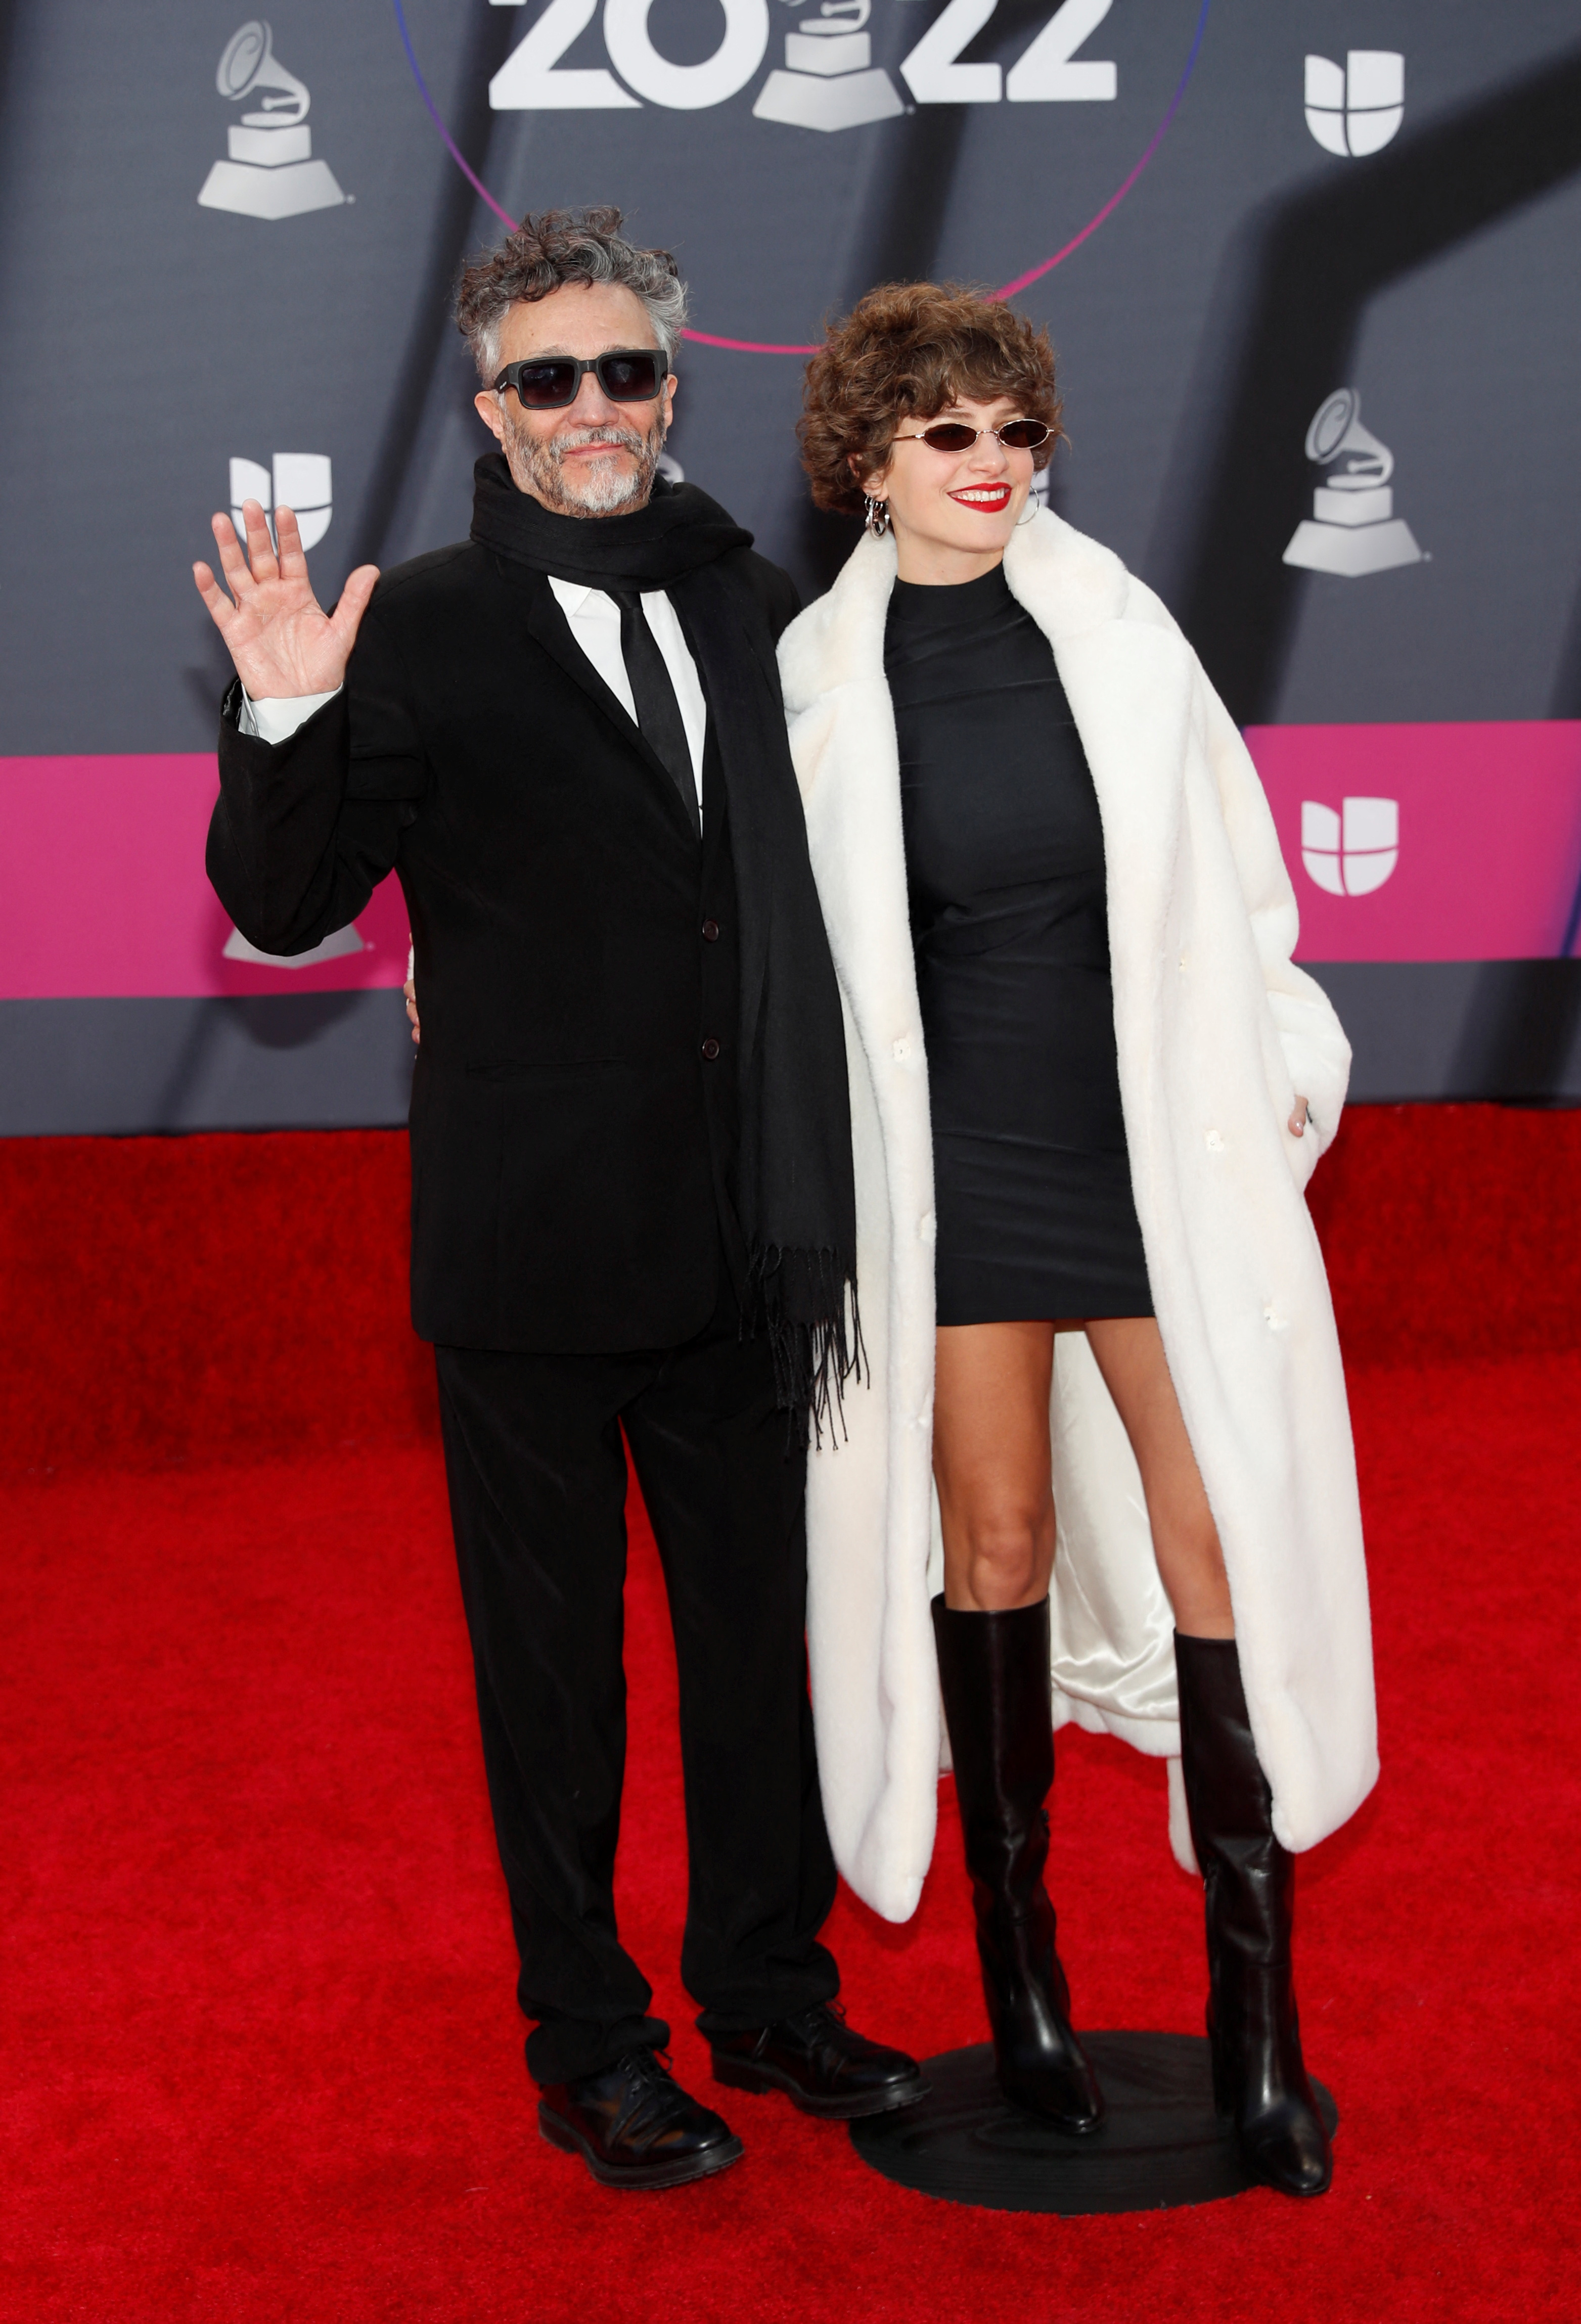 Fito Paez y Eugenia Kolodziej en la red carpet de los Latin Grammy Awards en Las Vegas, Nevada (REUTERS/Steve Marcus)